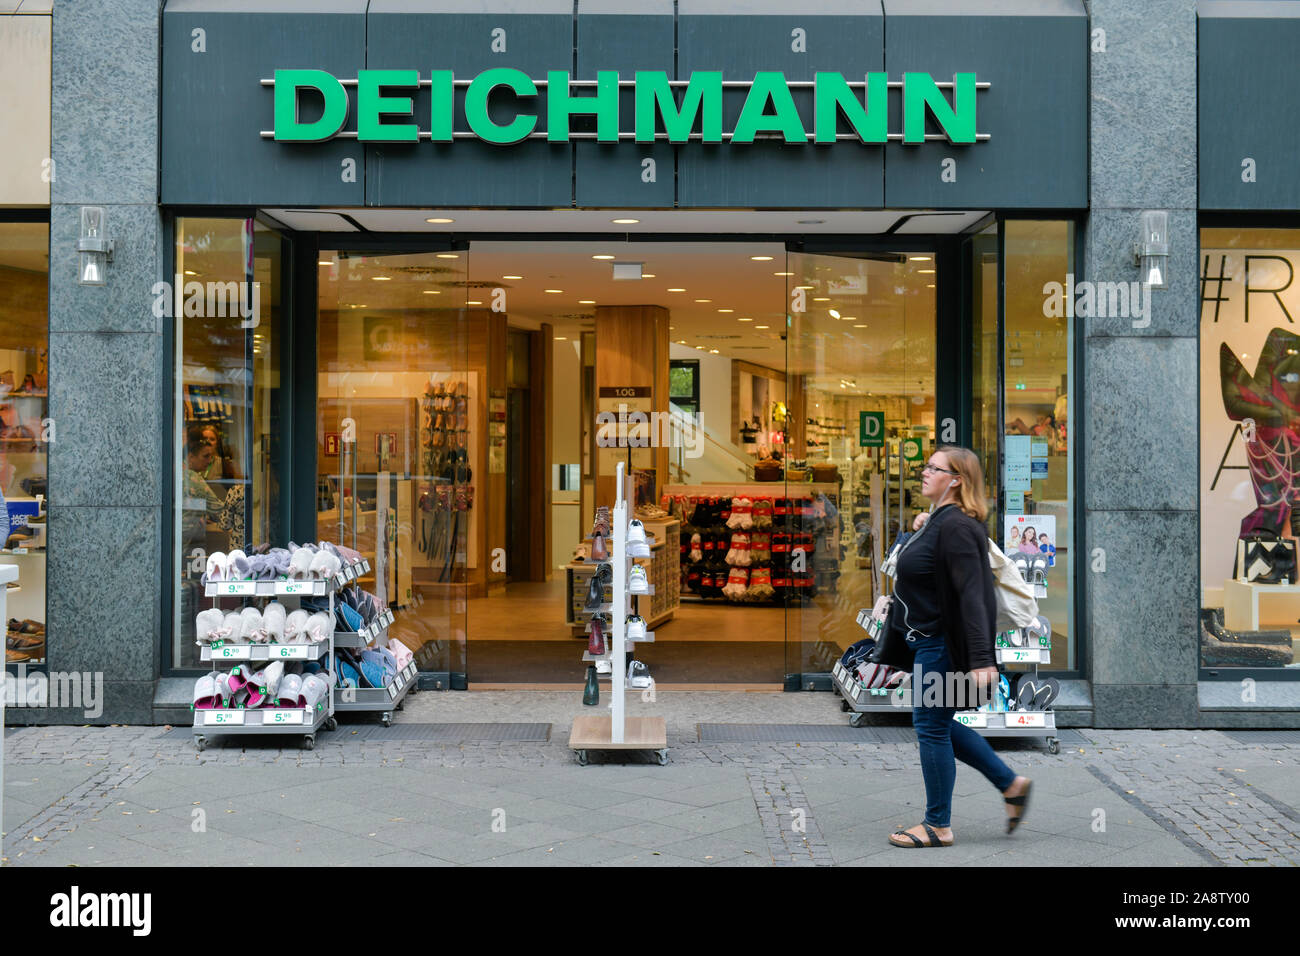 Uskyld skat Duke Deichmann High Resolution Stock Photography and Images - Alamy